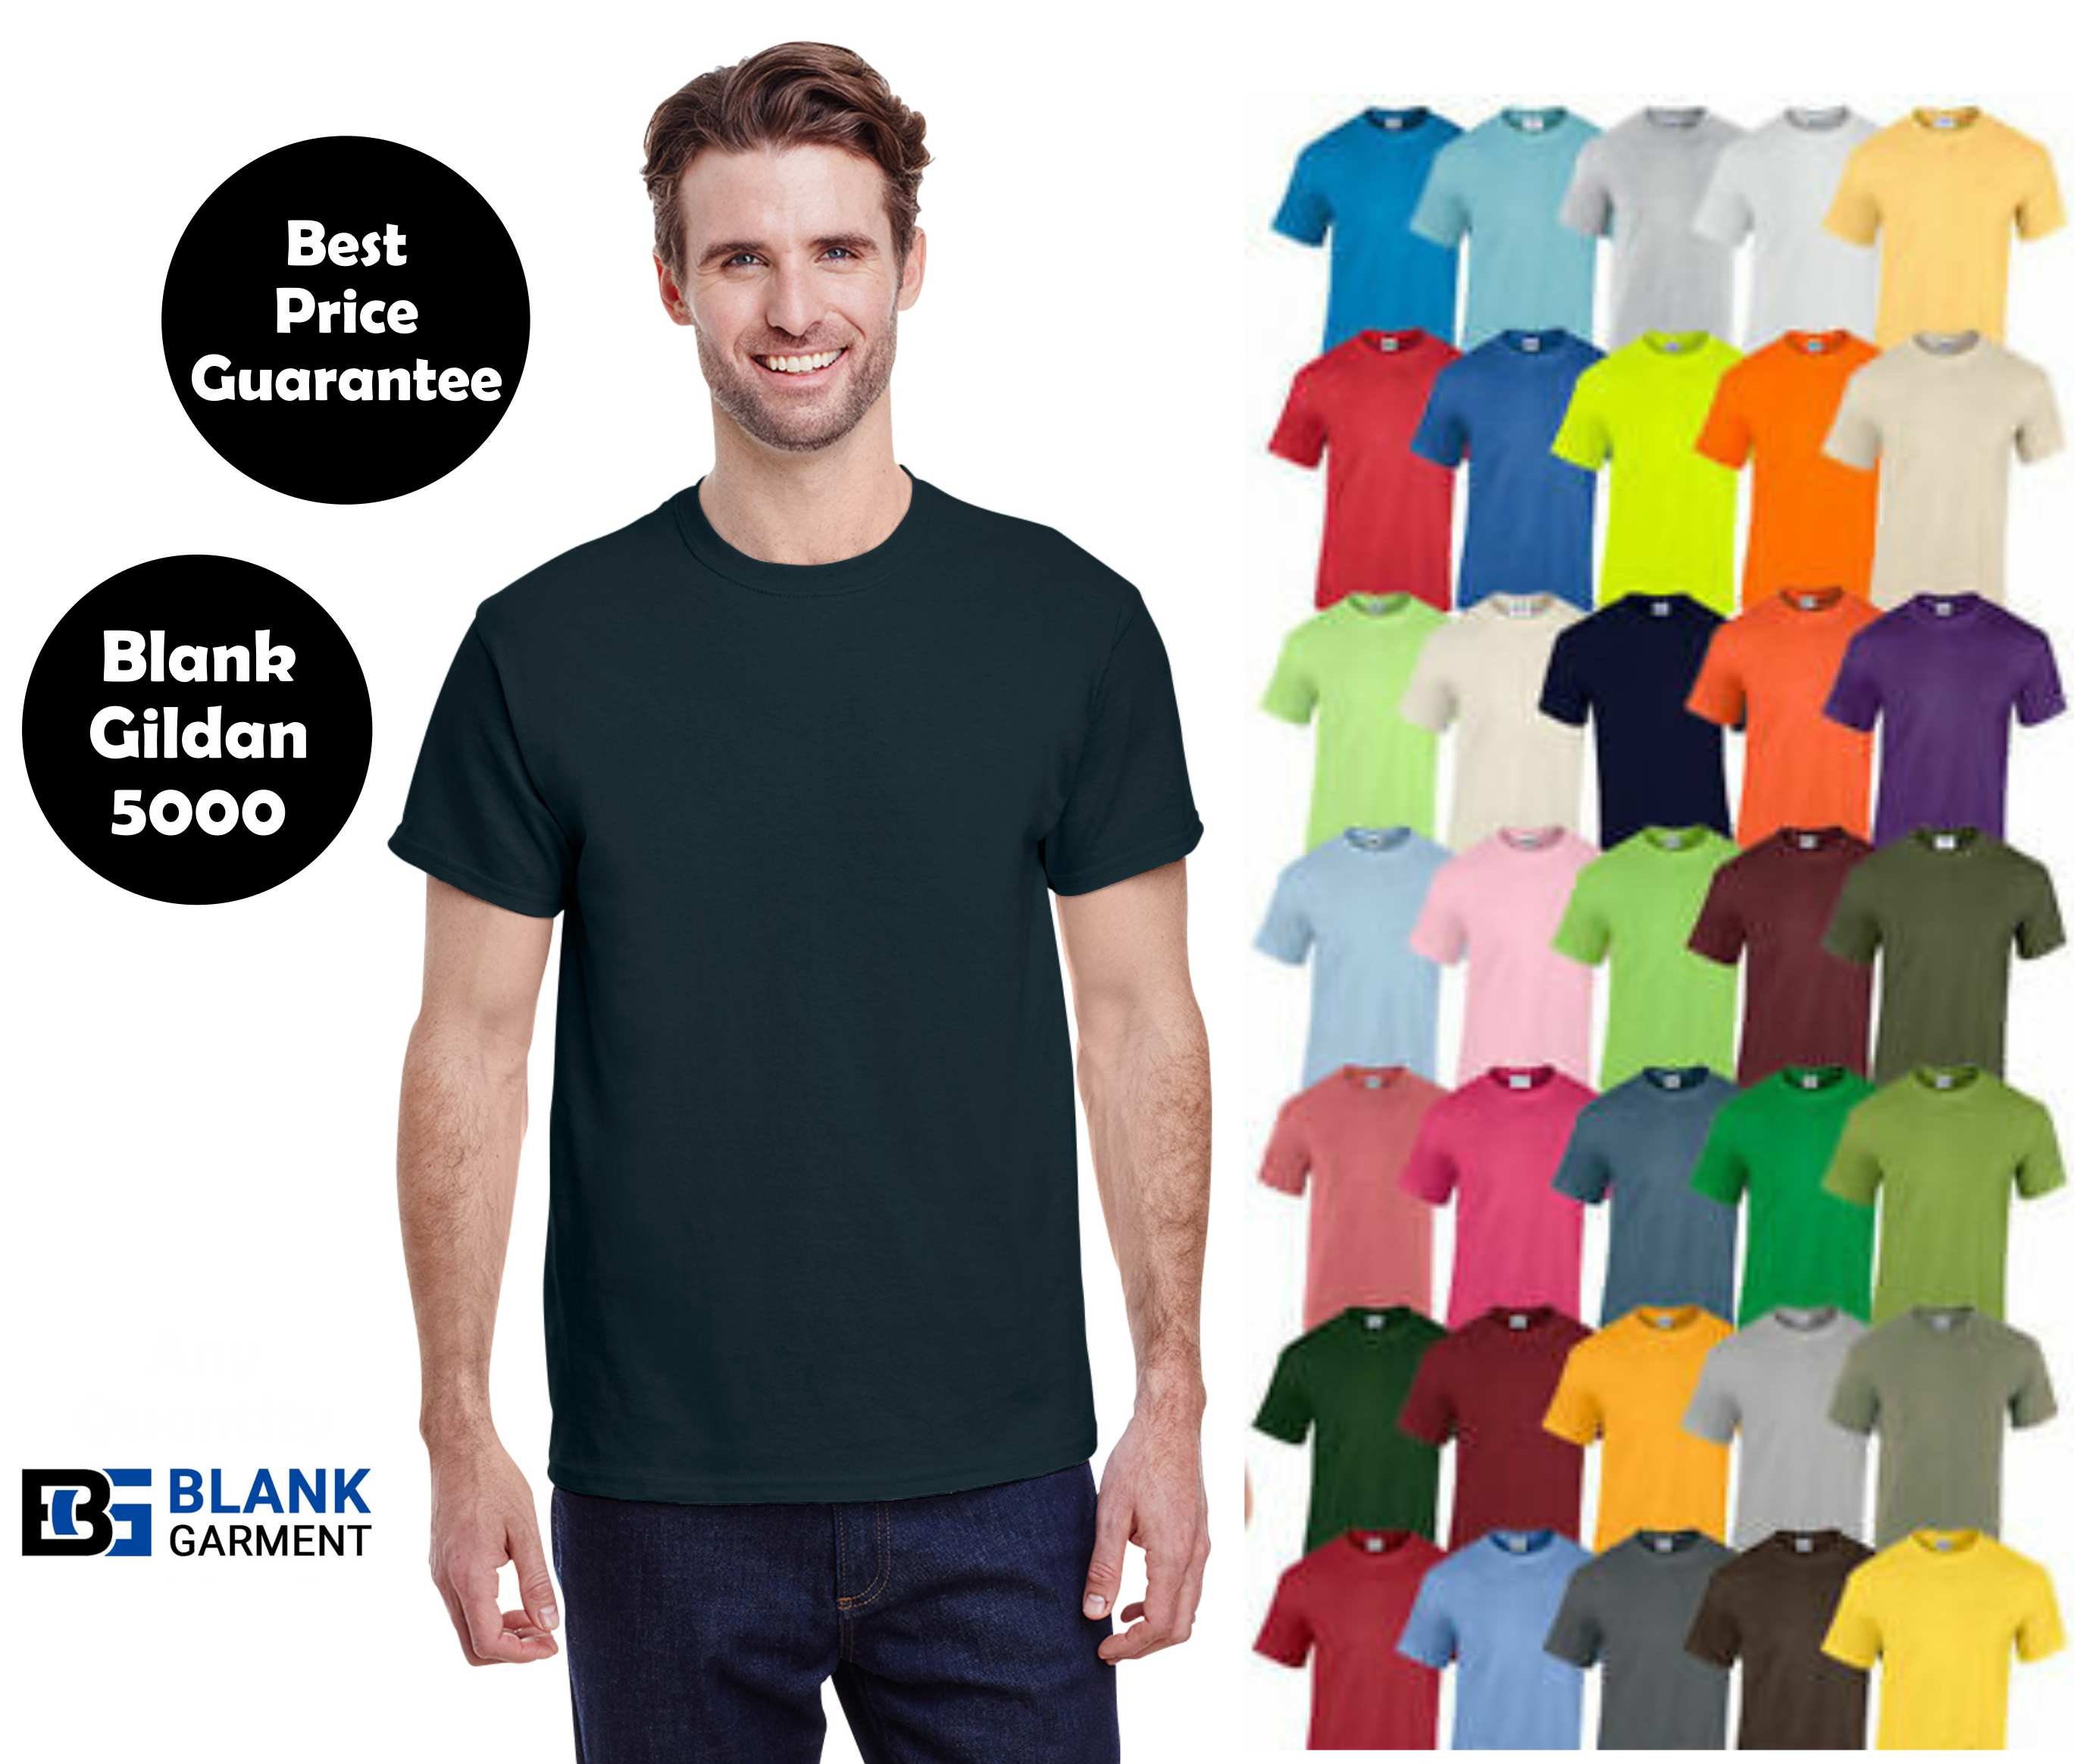 (5 Pack) GILDAN Short Sleeve Mix Colors Plain T Shirts S M L XL 2XL 3XL 4XL  5XL